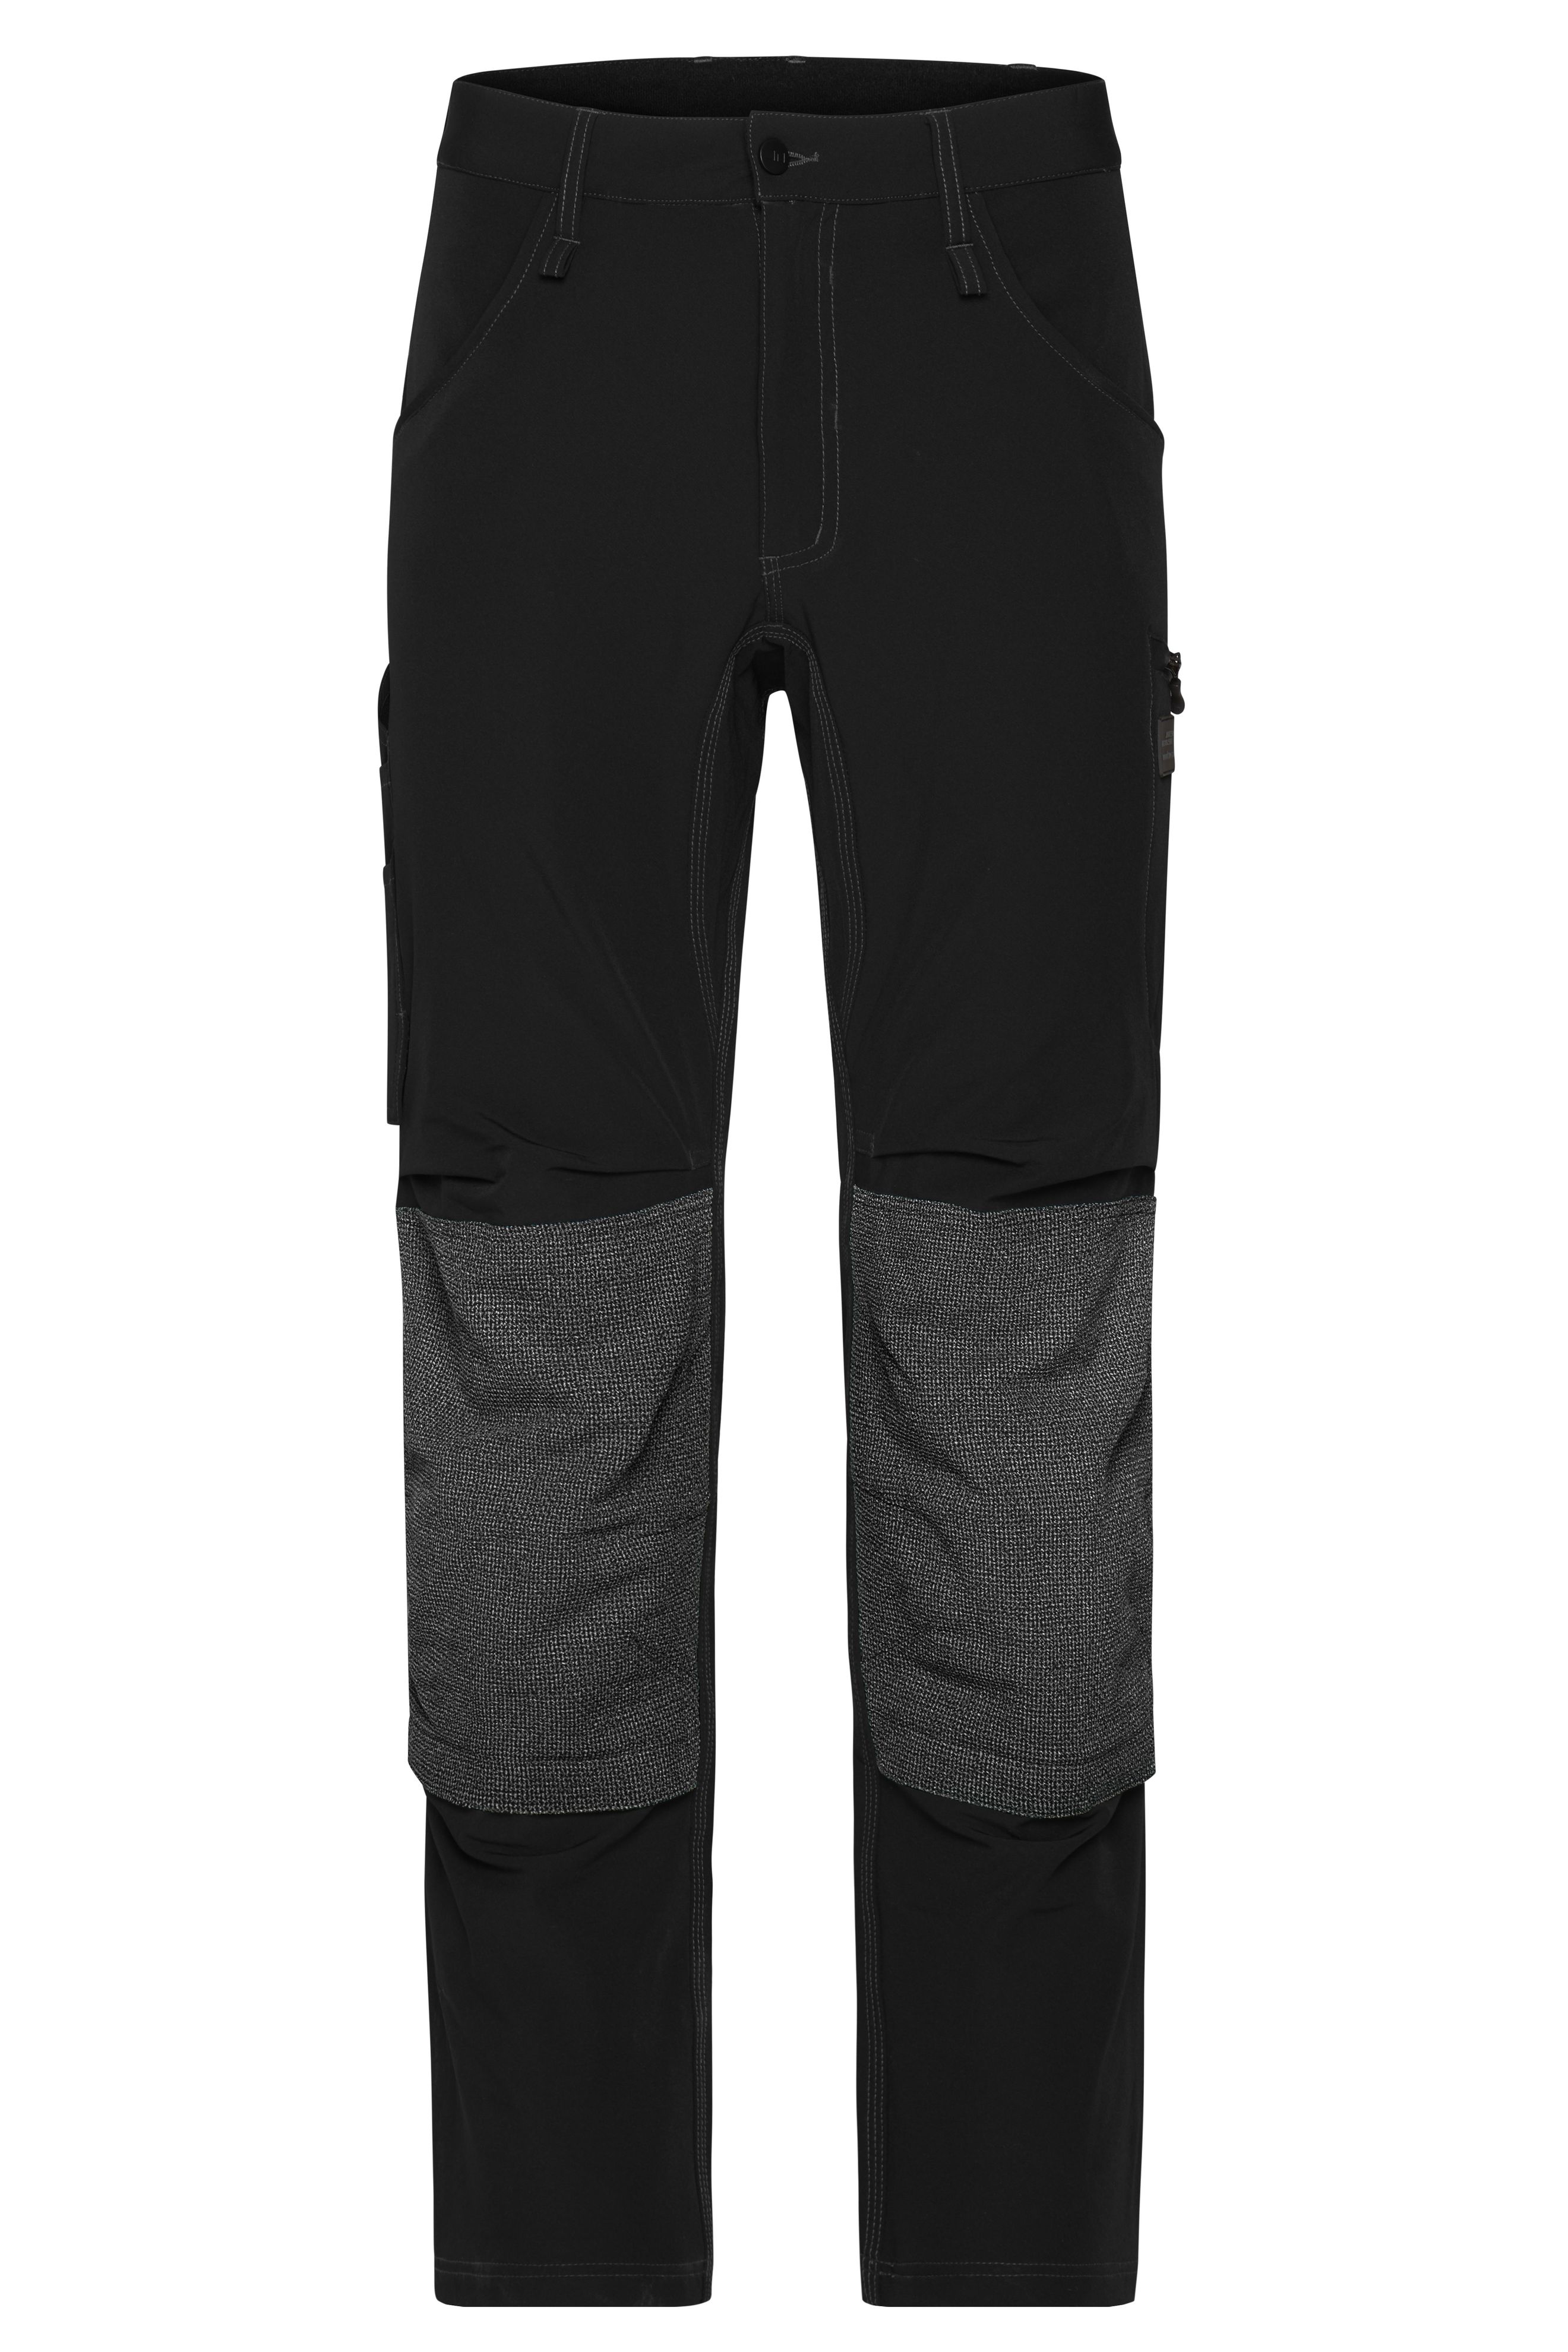 Unisex Workwear Pants 4-Way Stretch Slim Line Black-Workweartextilien